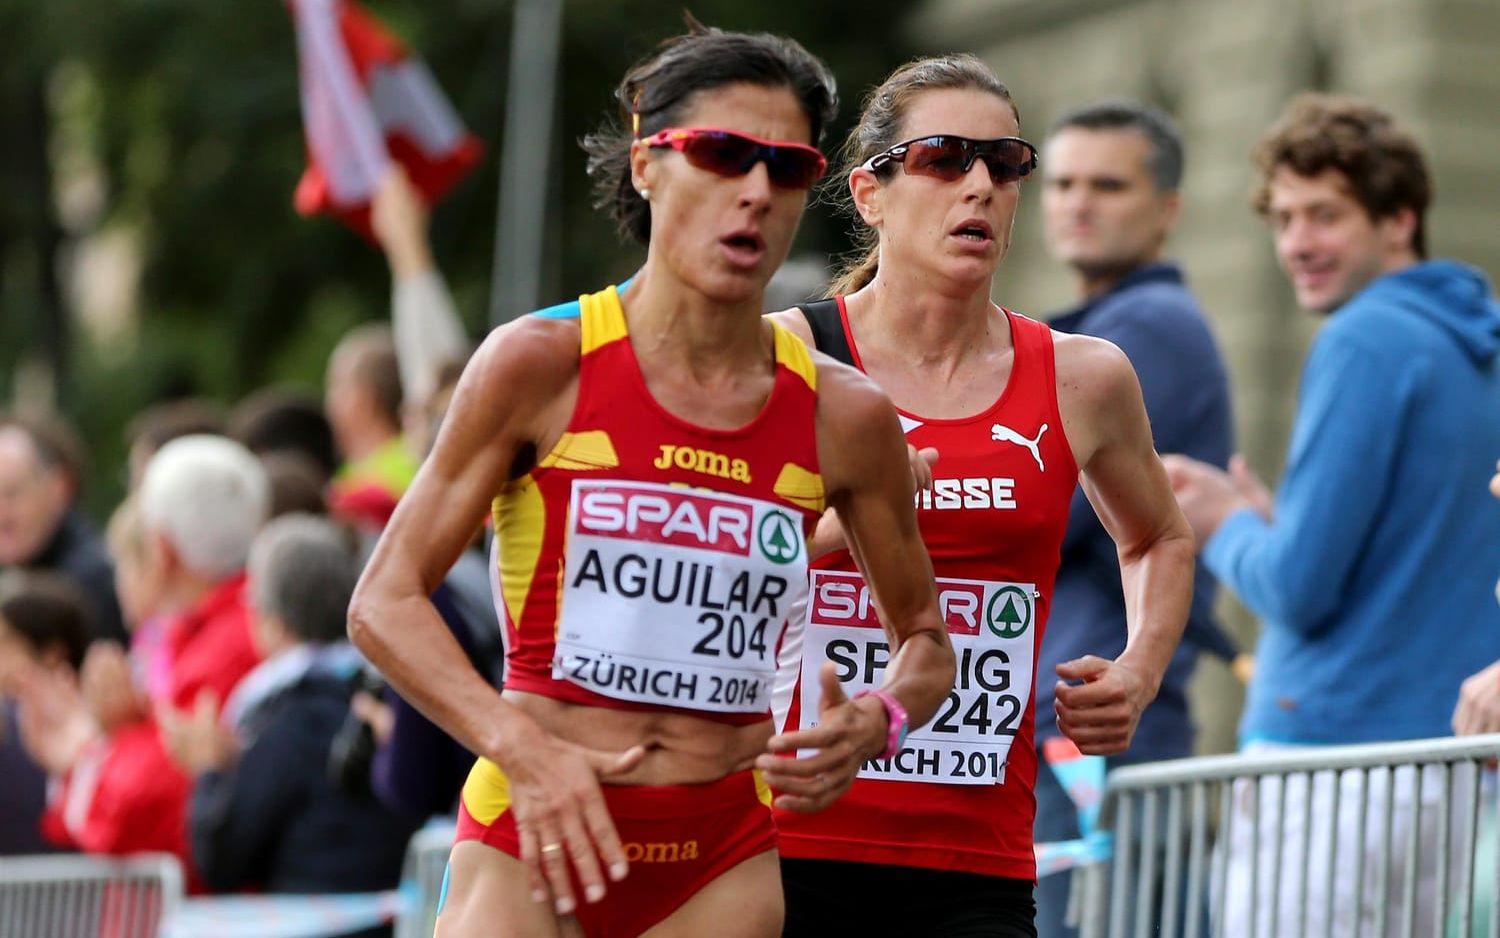 Alessandra Aguilar, Spanien, fälldes 2011. Hon tävlar i grenen maraton.